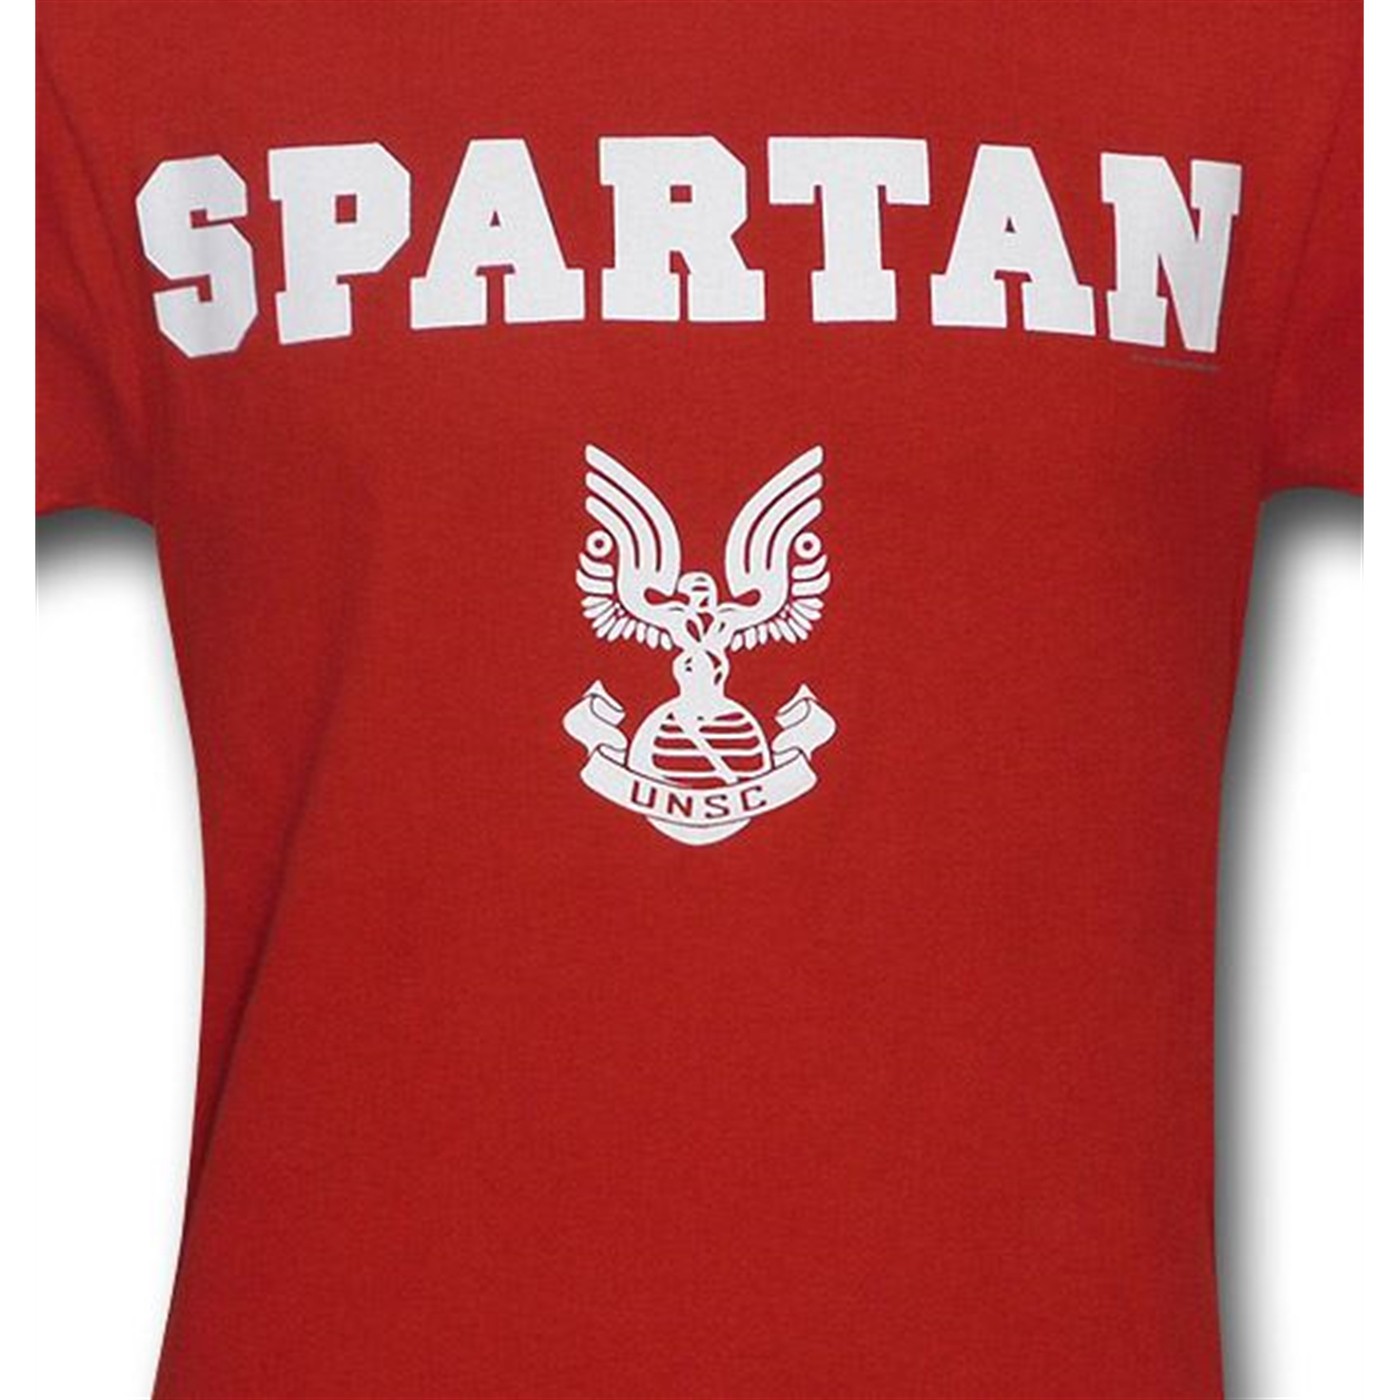 HALO Spartan Logo T-Shirt